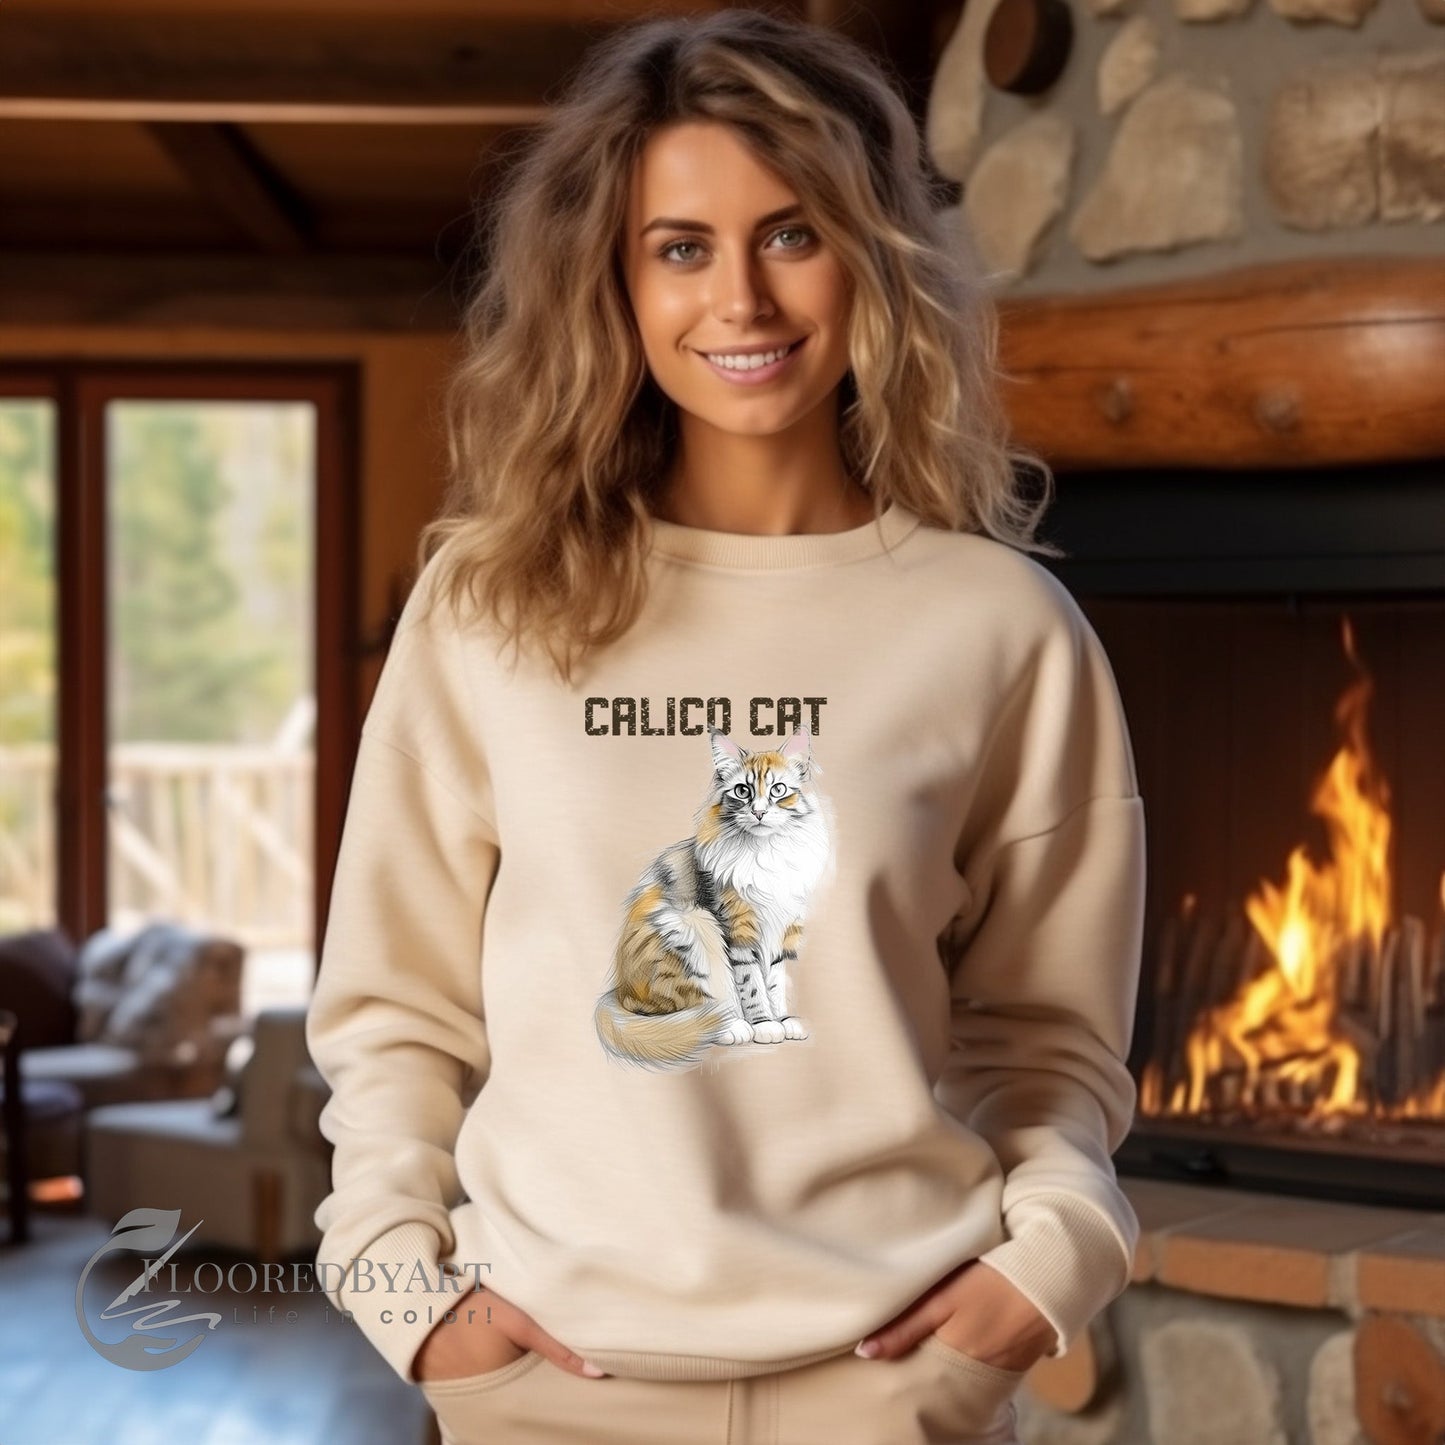 Calico Cat Mom Sweatshirt, Art Cat Shirt, Purrfect Cat Gift Sweater, Cats in Art - FlooredByArt